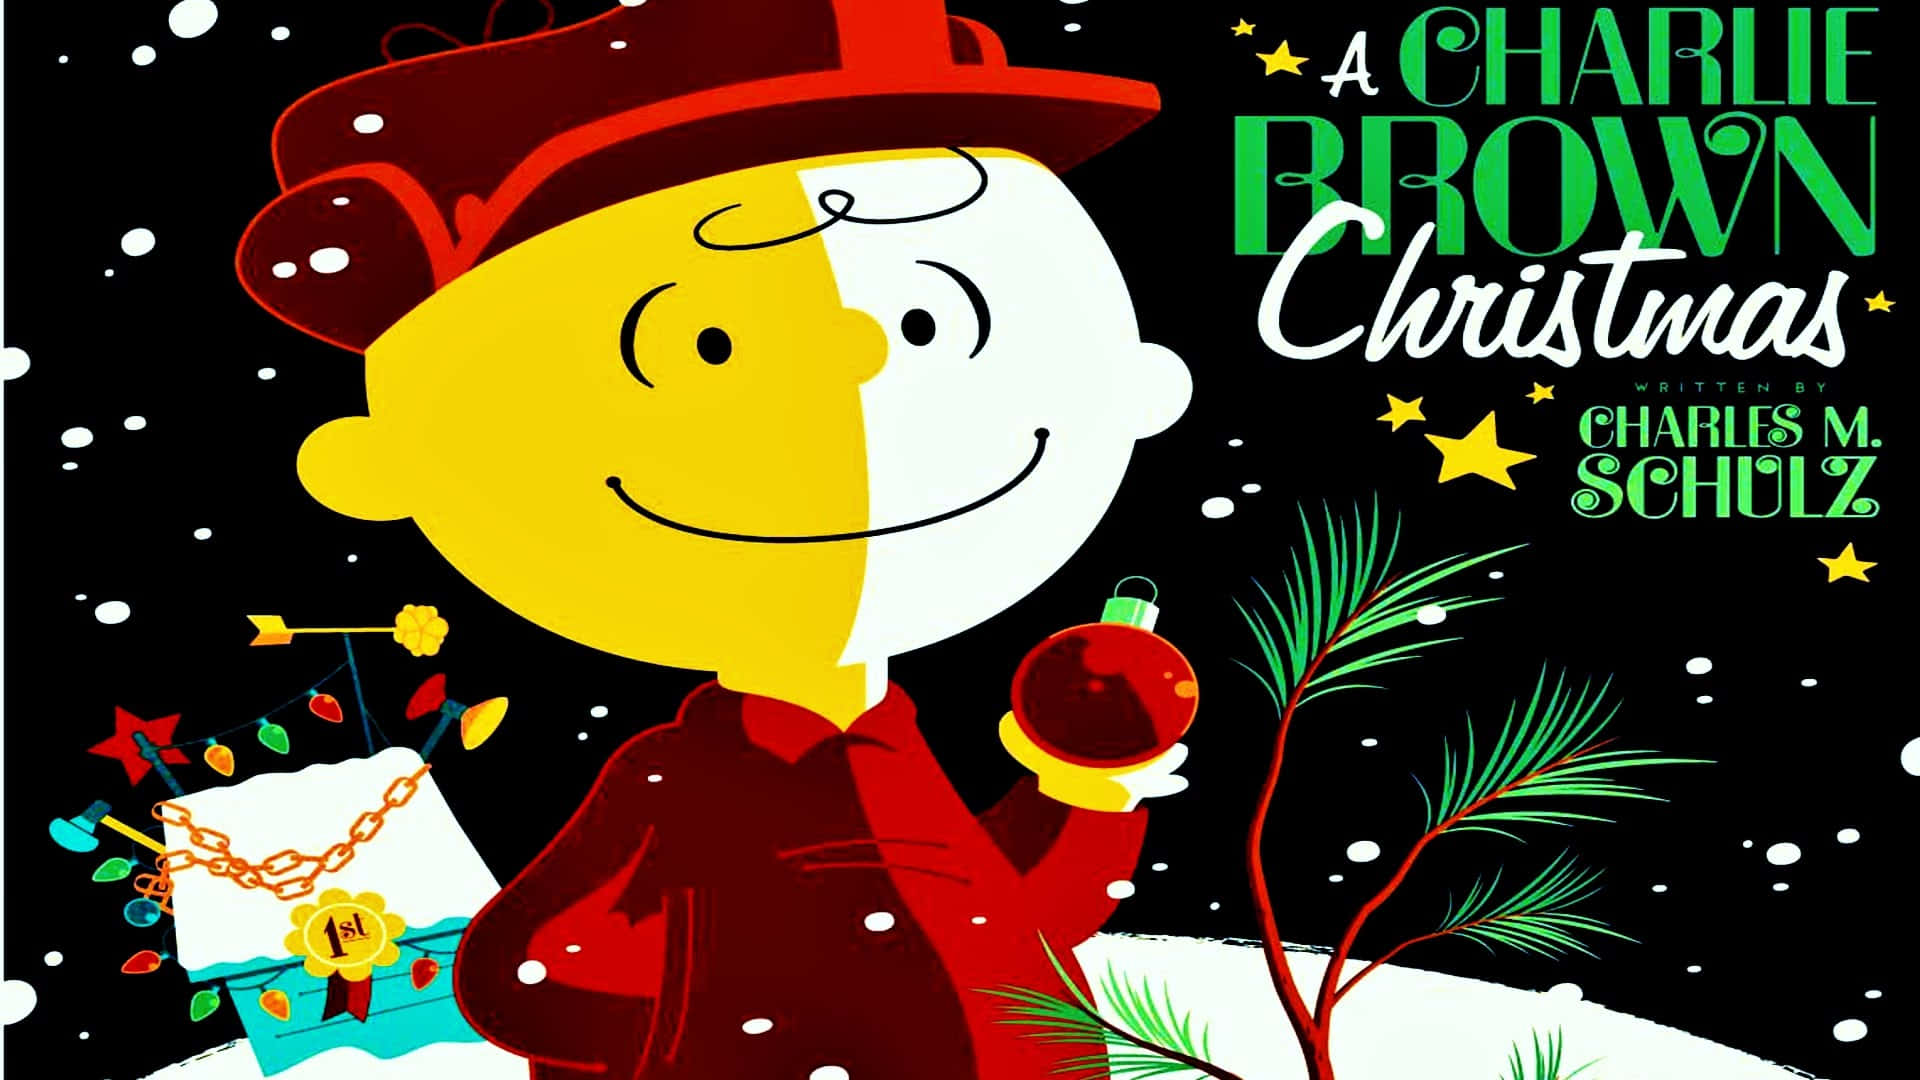 En Charlie Brown Jul af Charlie Brown Wallpaper